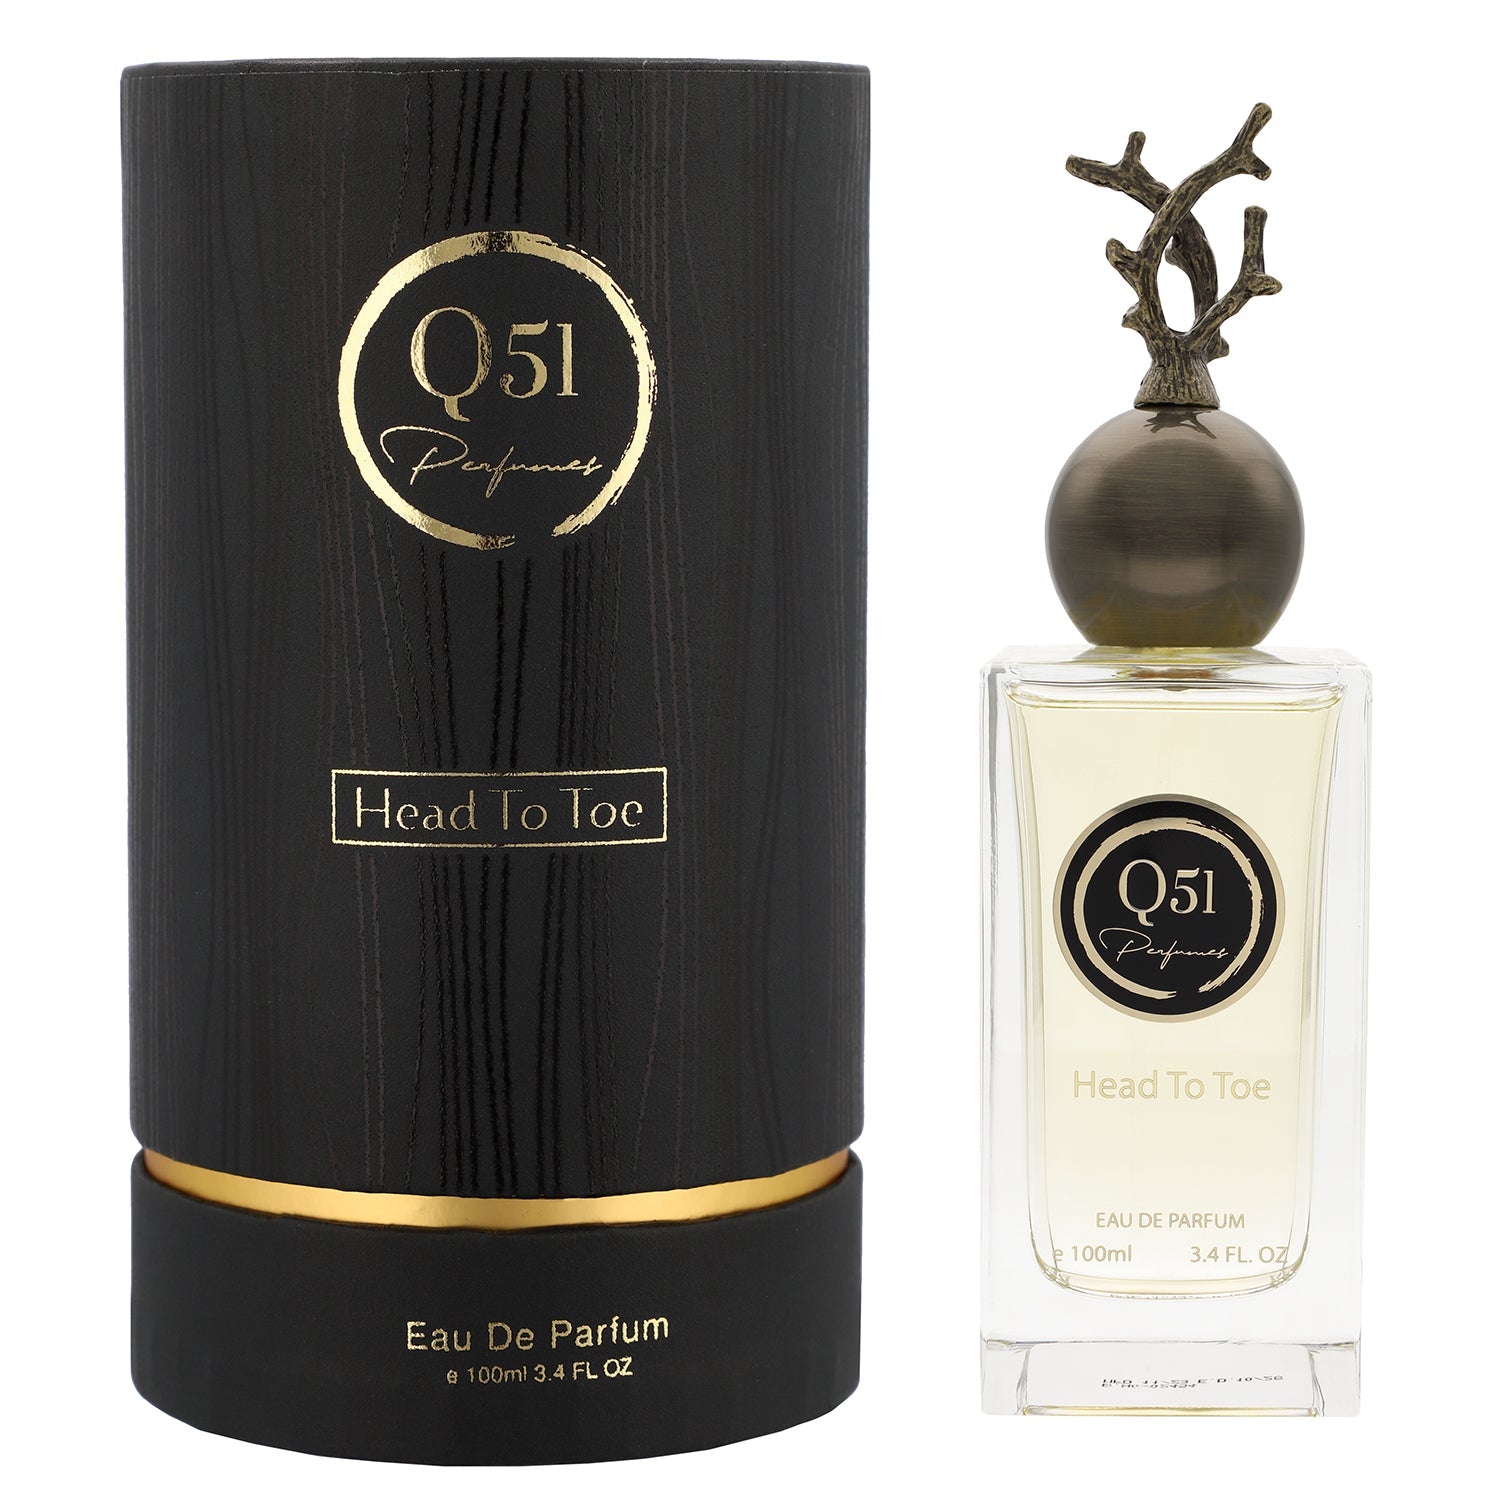 Head To Toe EDP 100 ml from  Q51 Perfumes